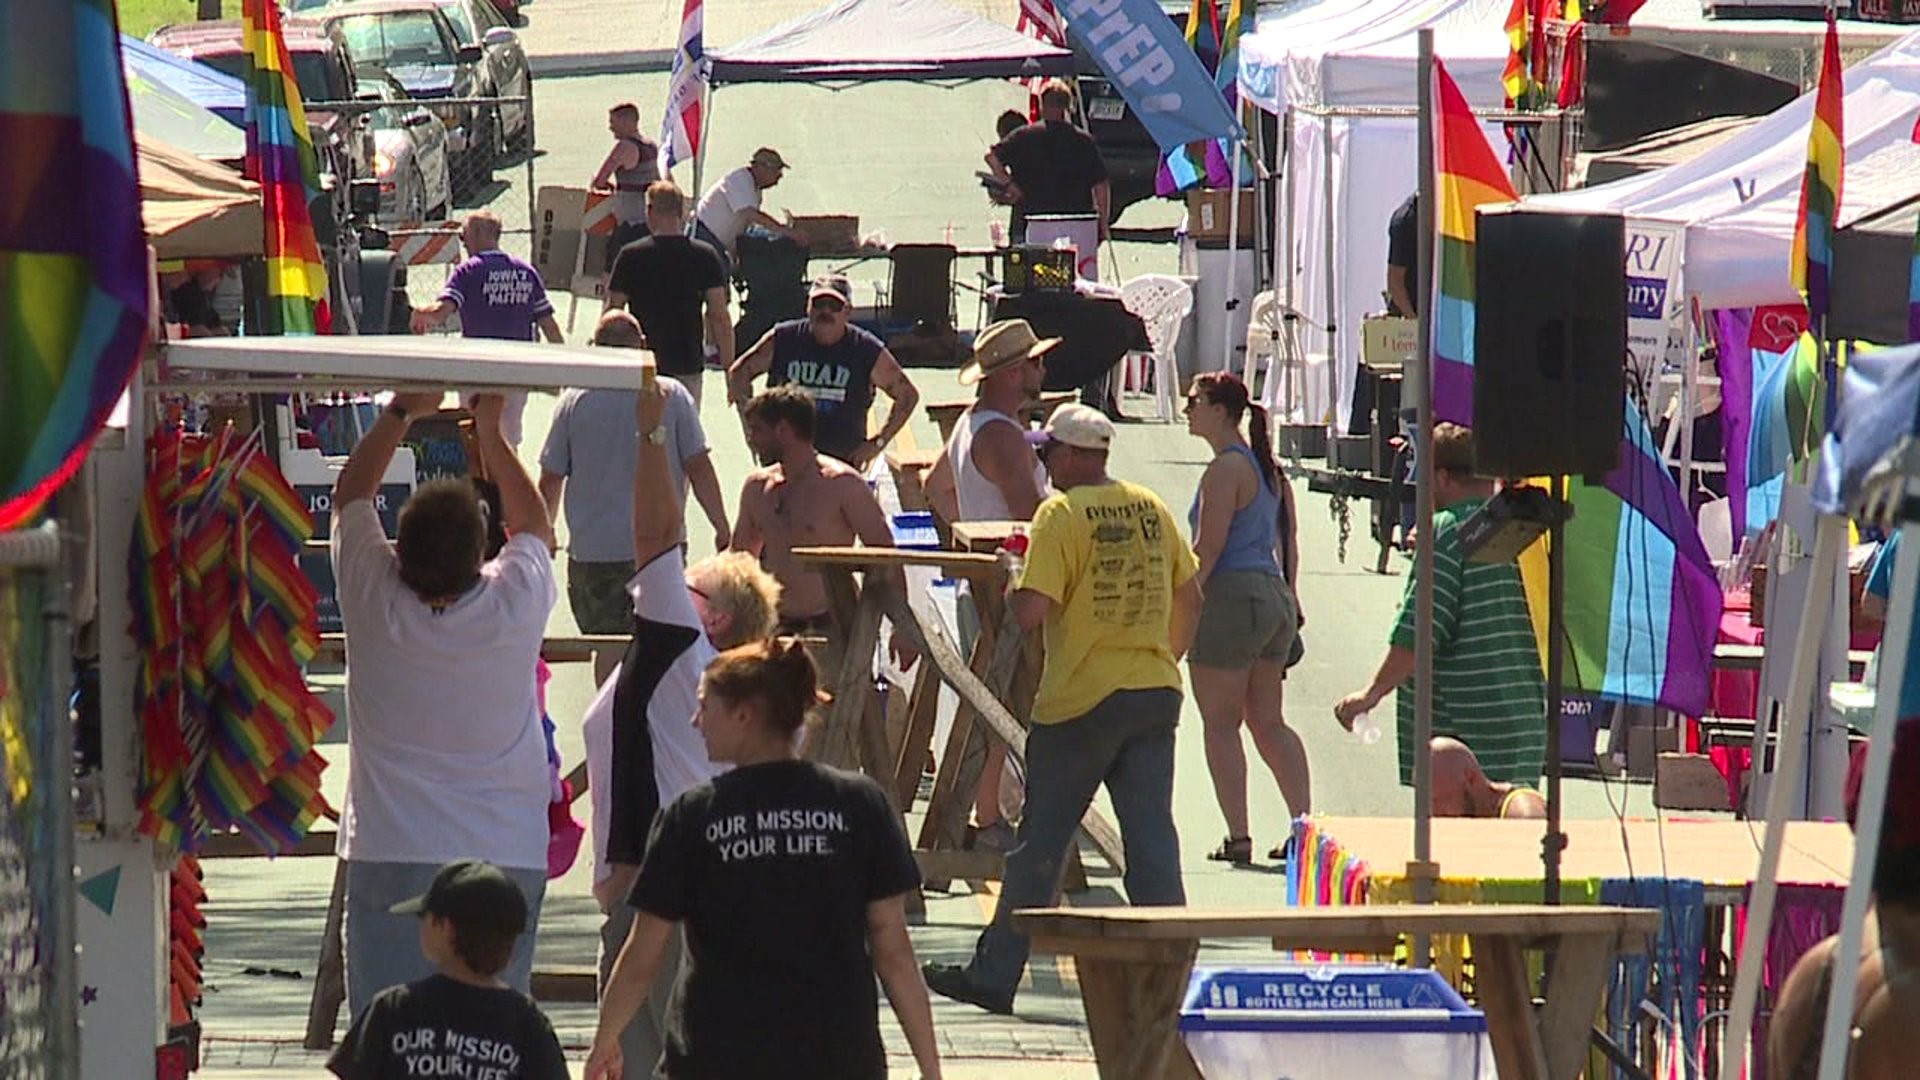 Witness recalls hearing slurs at PrideFest